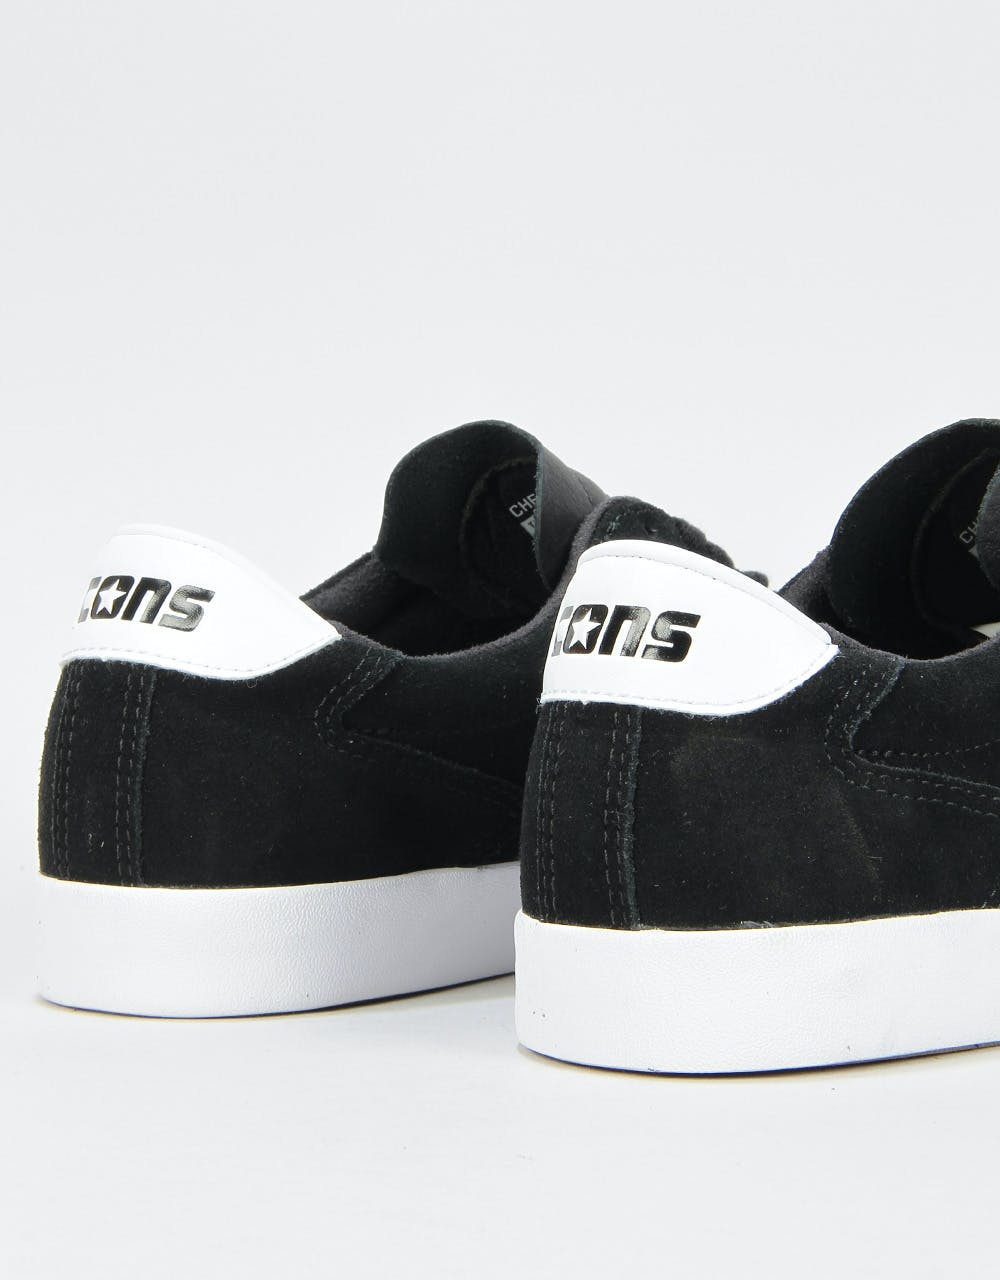 Converse Checkpoint Pro Classic Skate Shoes - Black/White/White